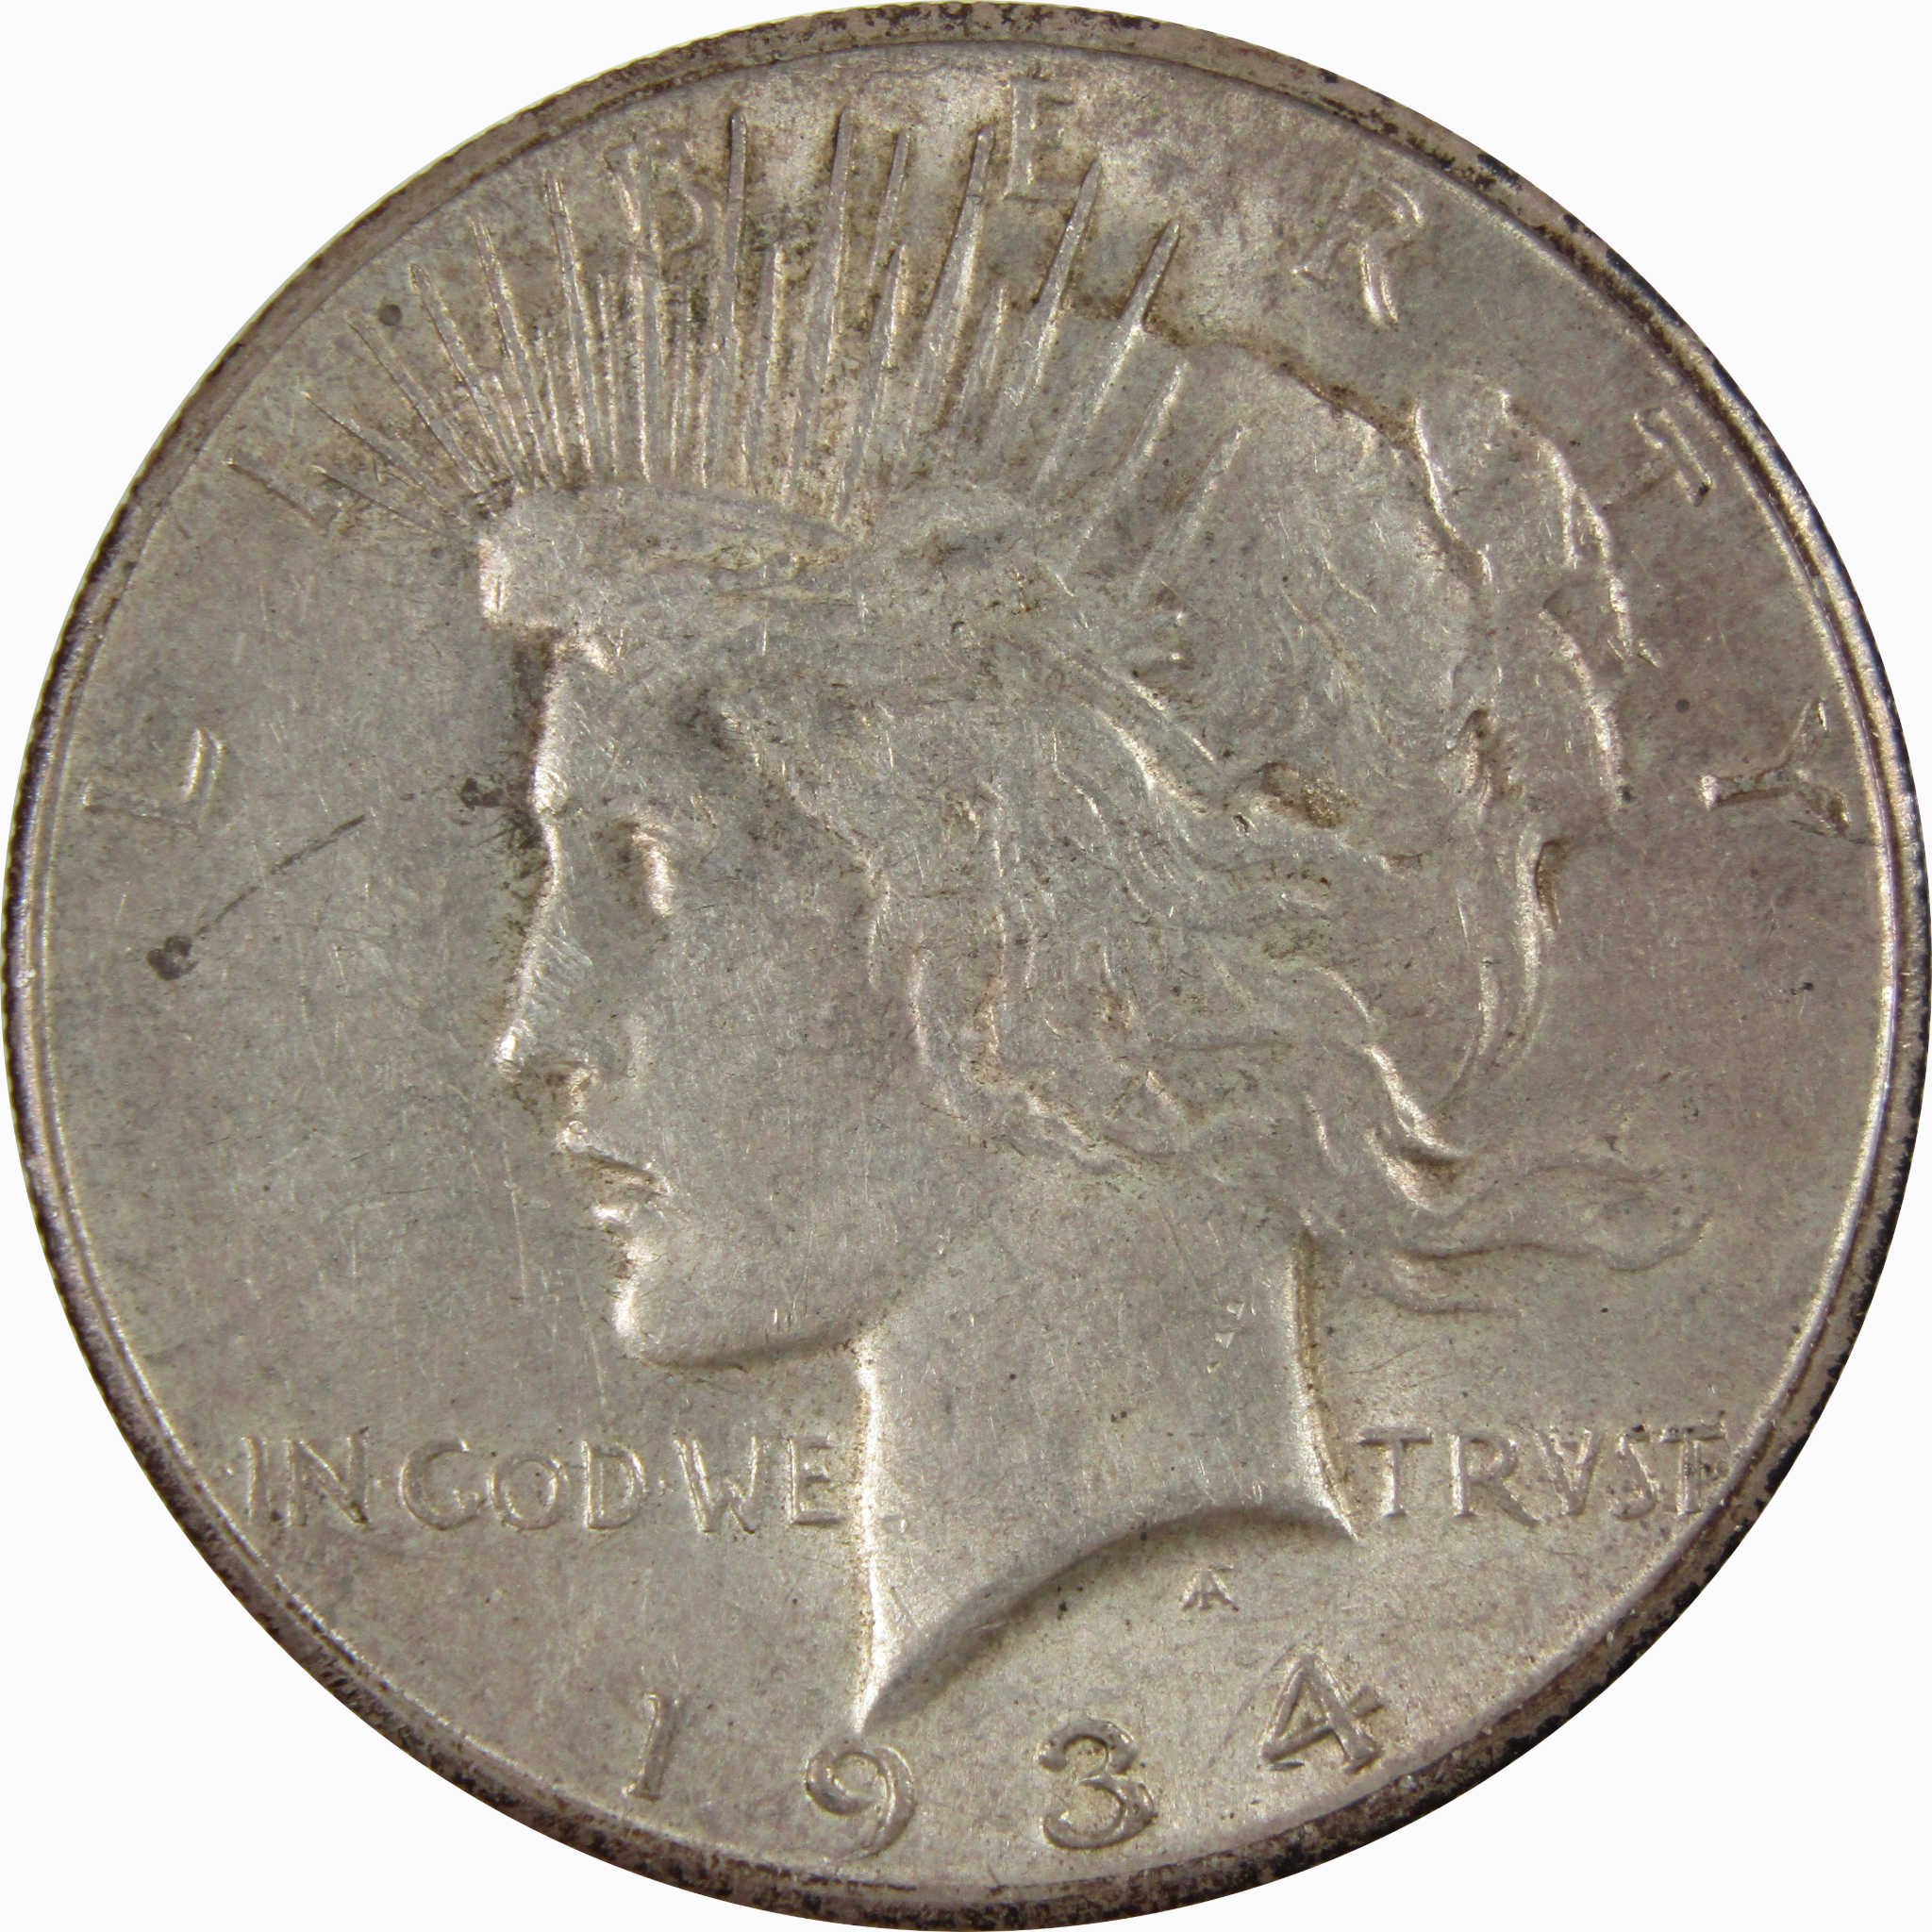 1934 S Peace Dollar Borderline Uncirculated 90% Silver $1 SKU:I4364